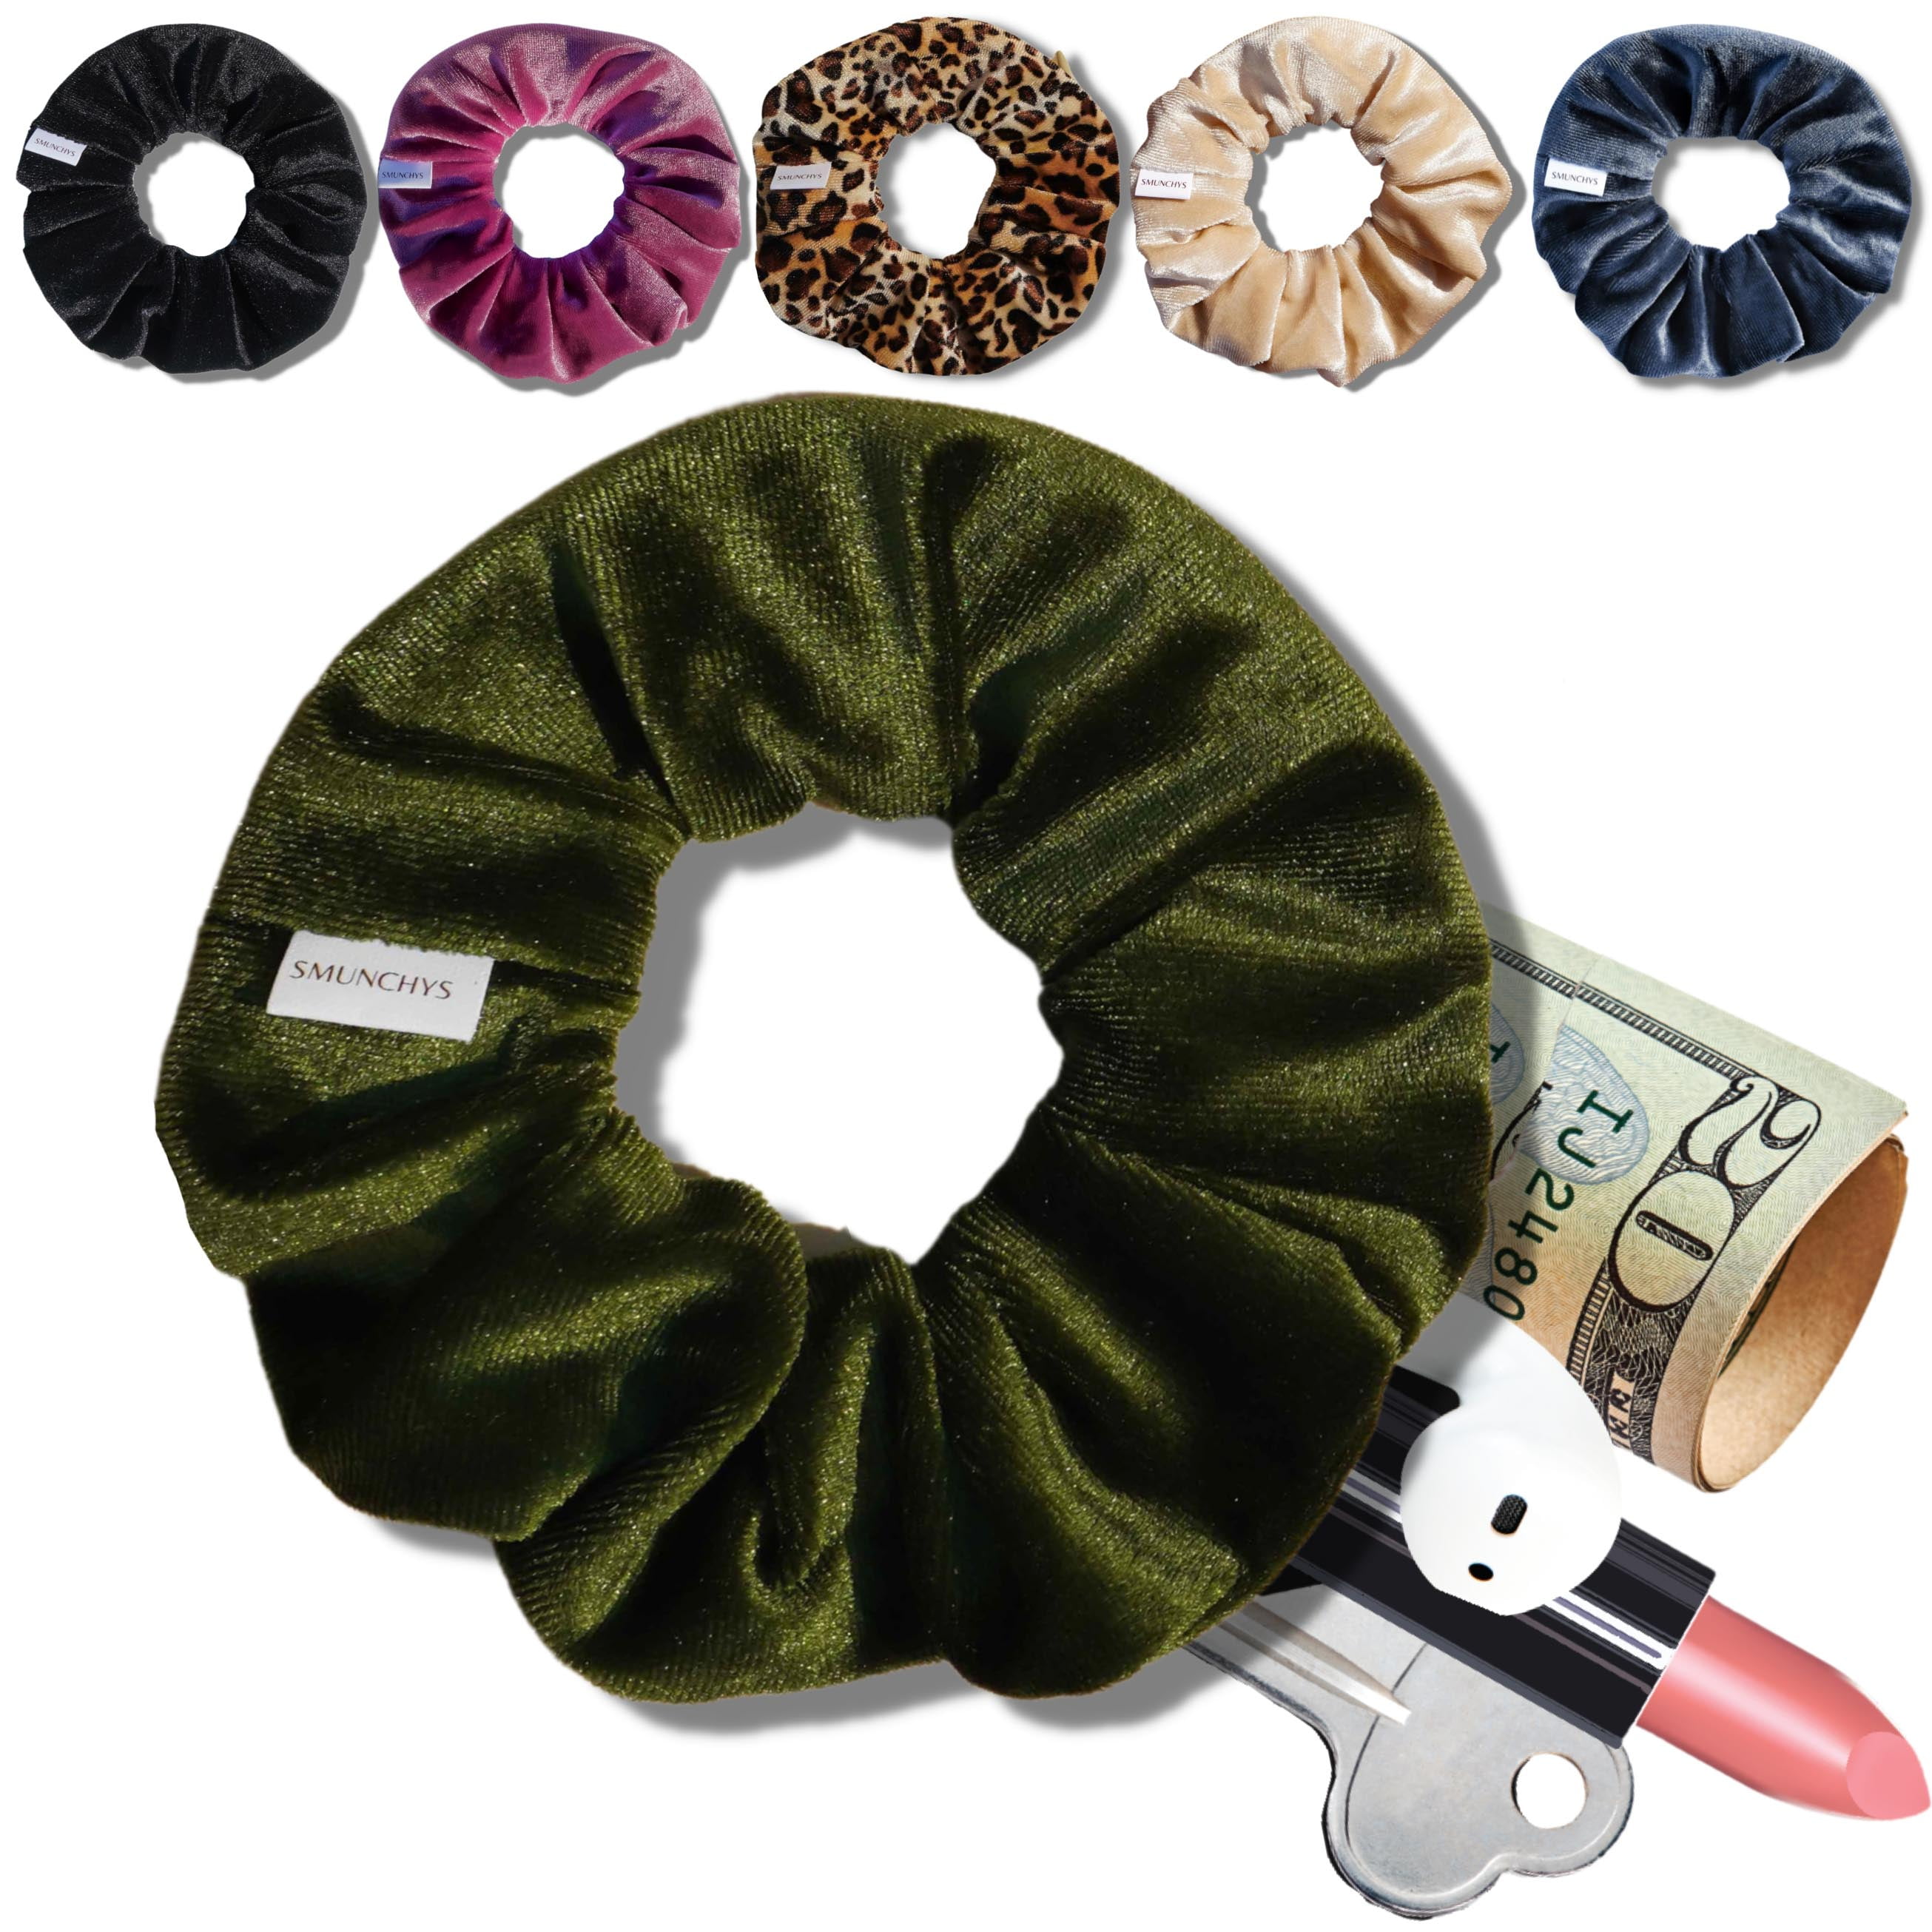 Velvet Hair Scrunchies (40pcs) with Scrunchies Holder- Colorful